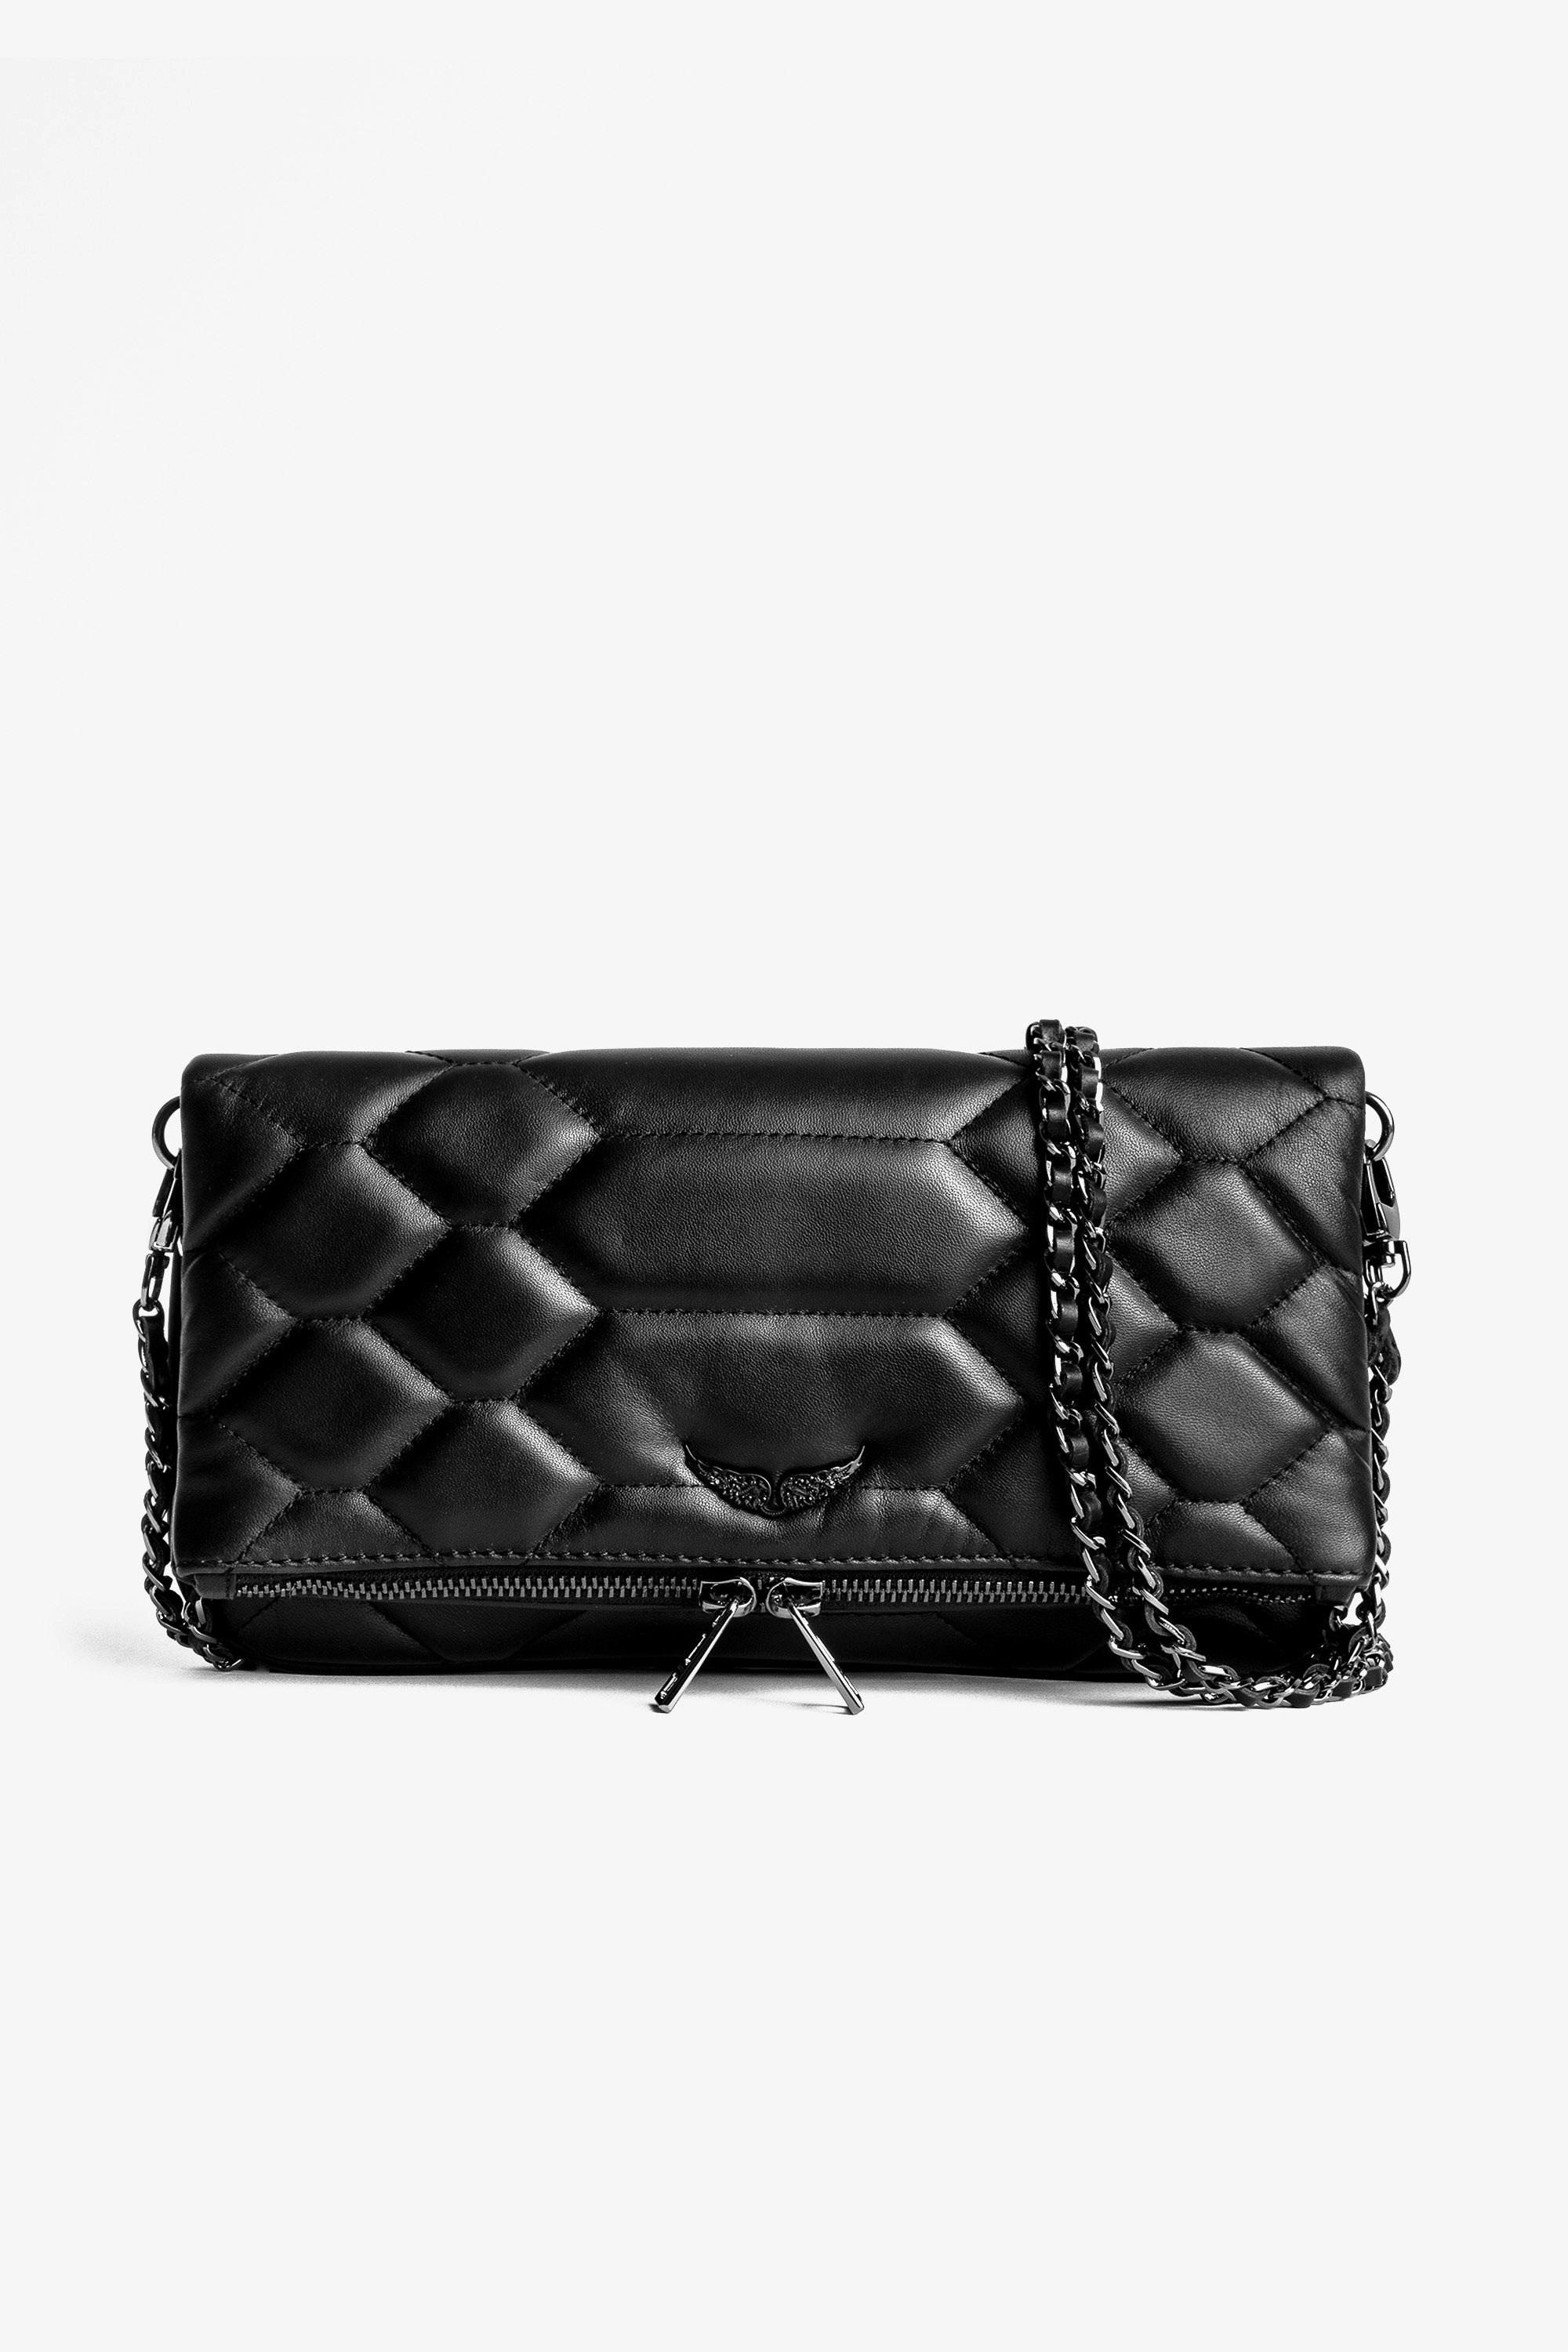 Bolso de mano Rock Mat XL Scale Emblemático bolso de mano Rock negro de piel acolchada para mujer.